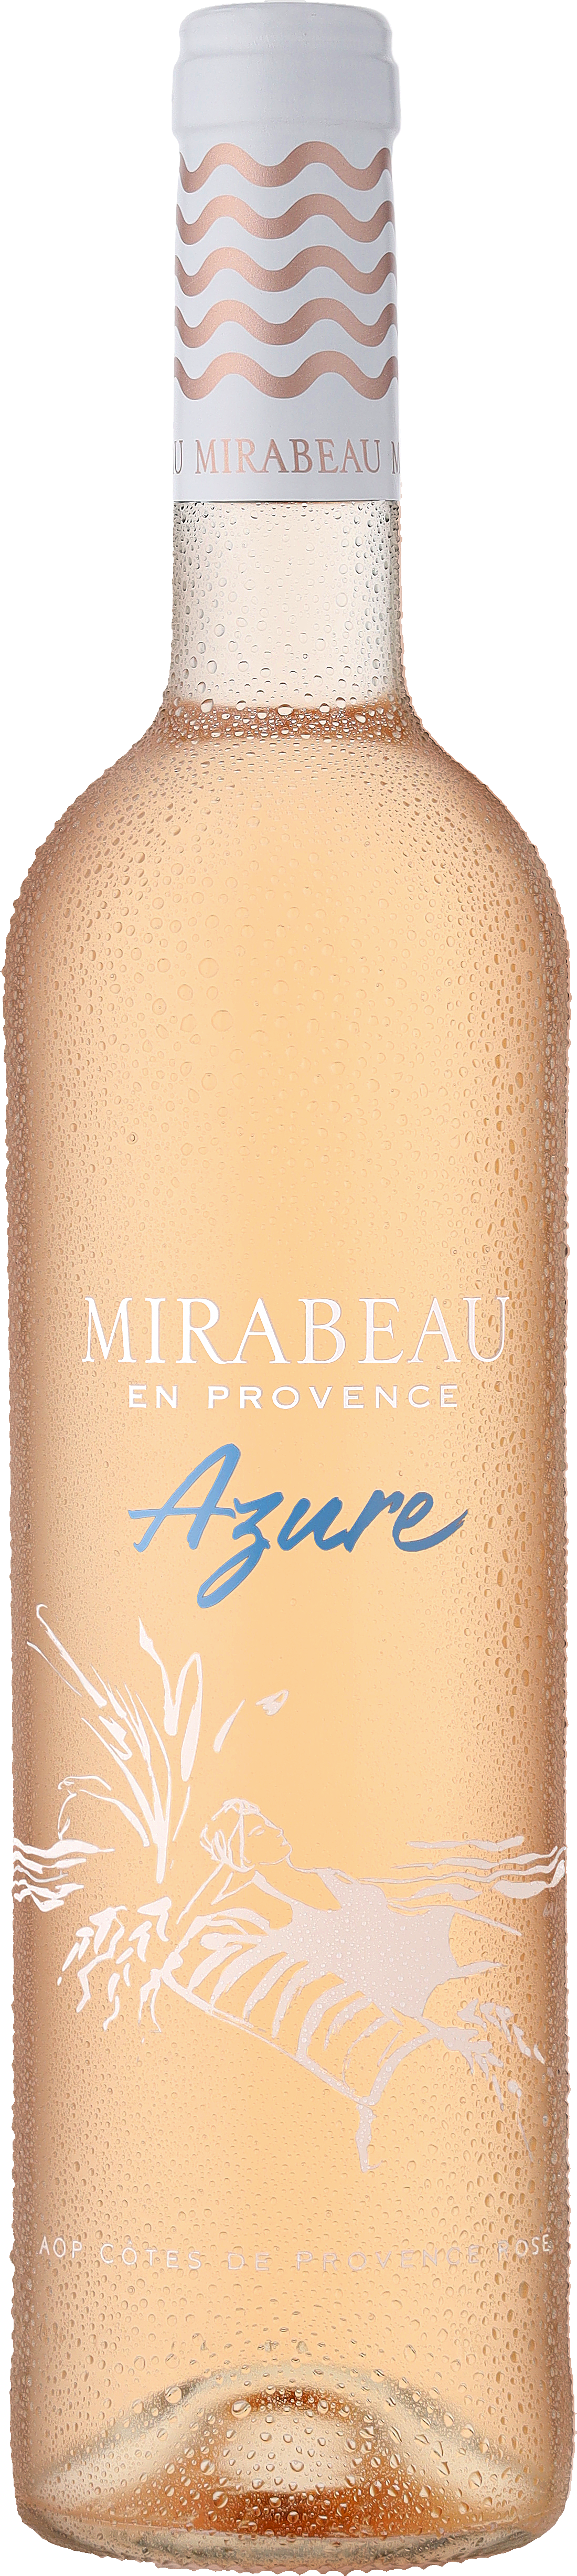 Mirabeau »Azure« Rosé